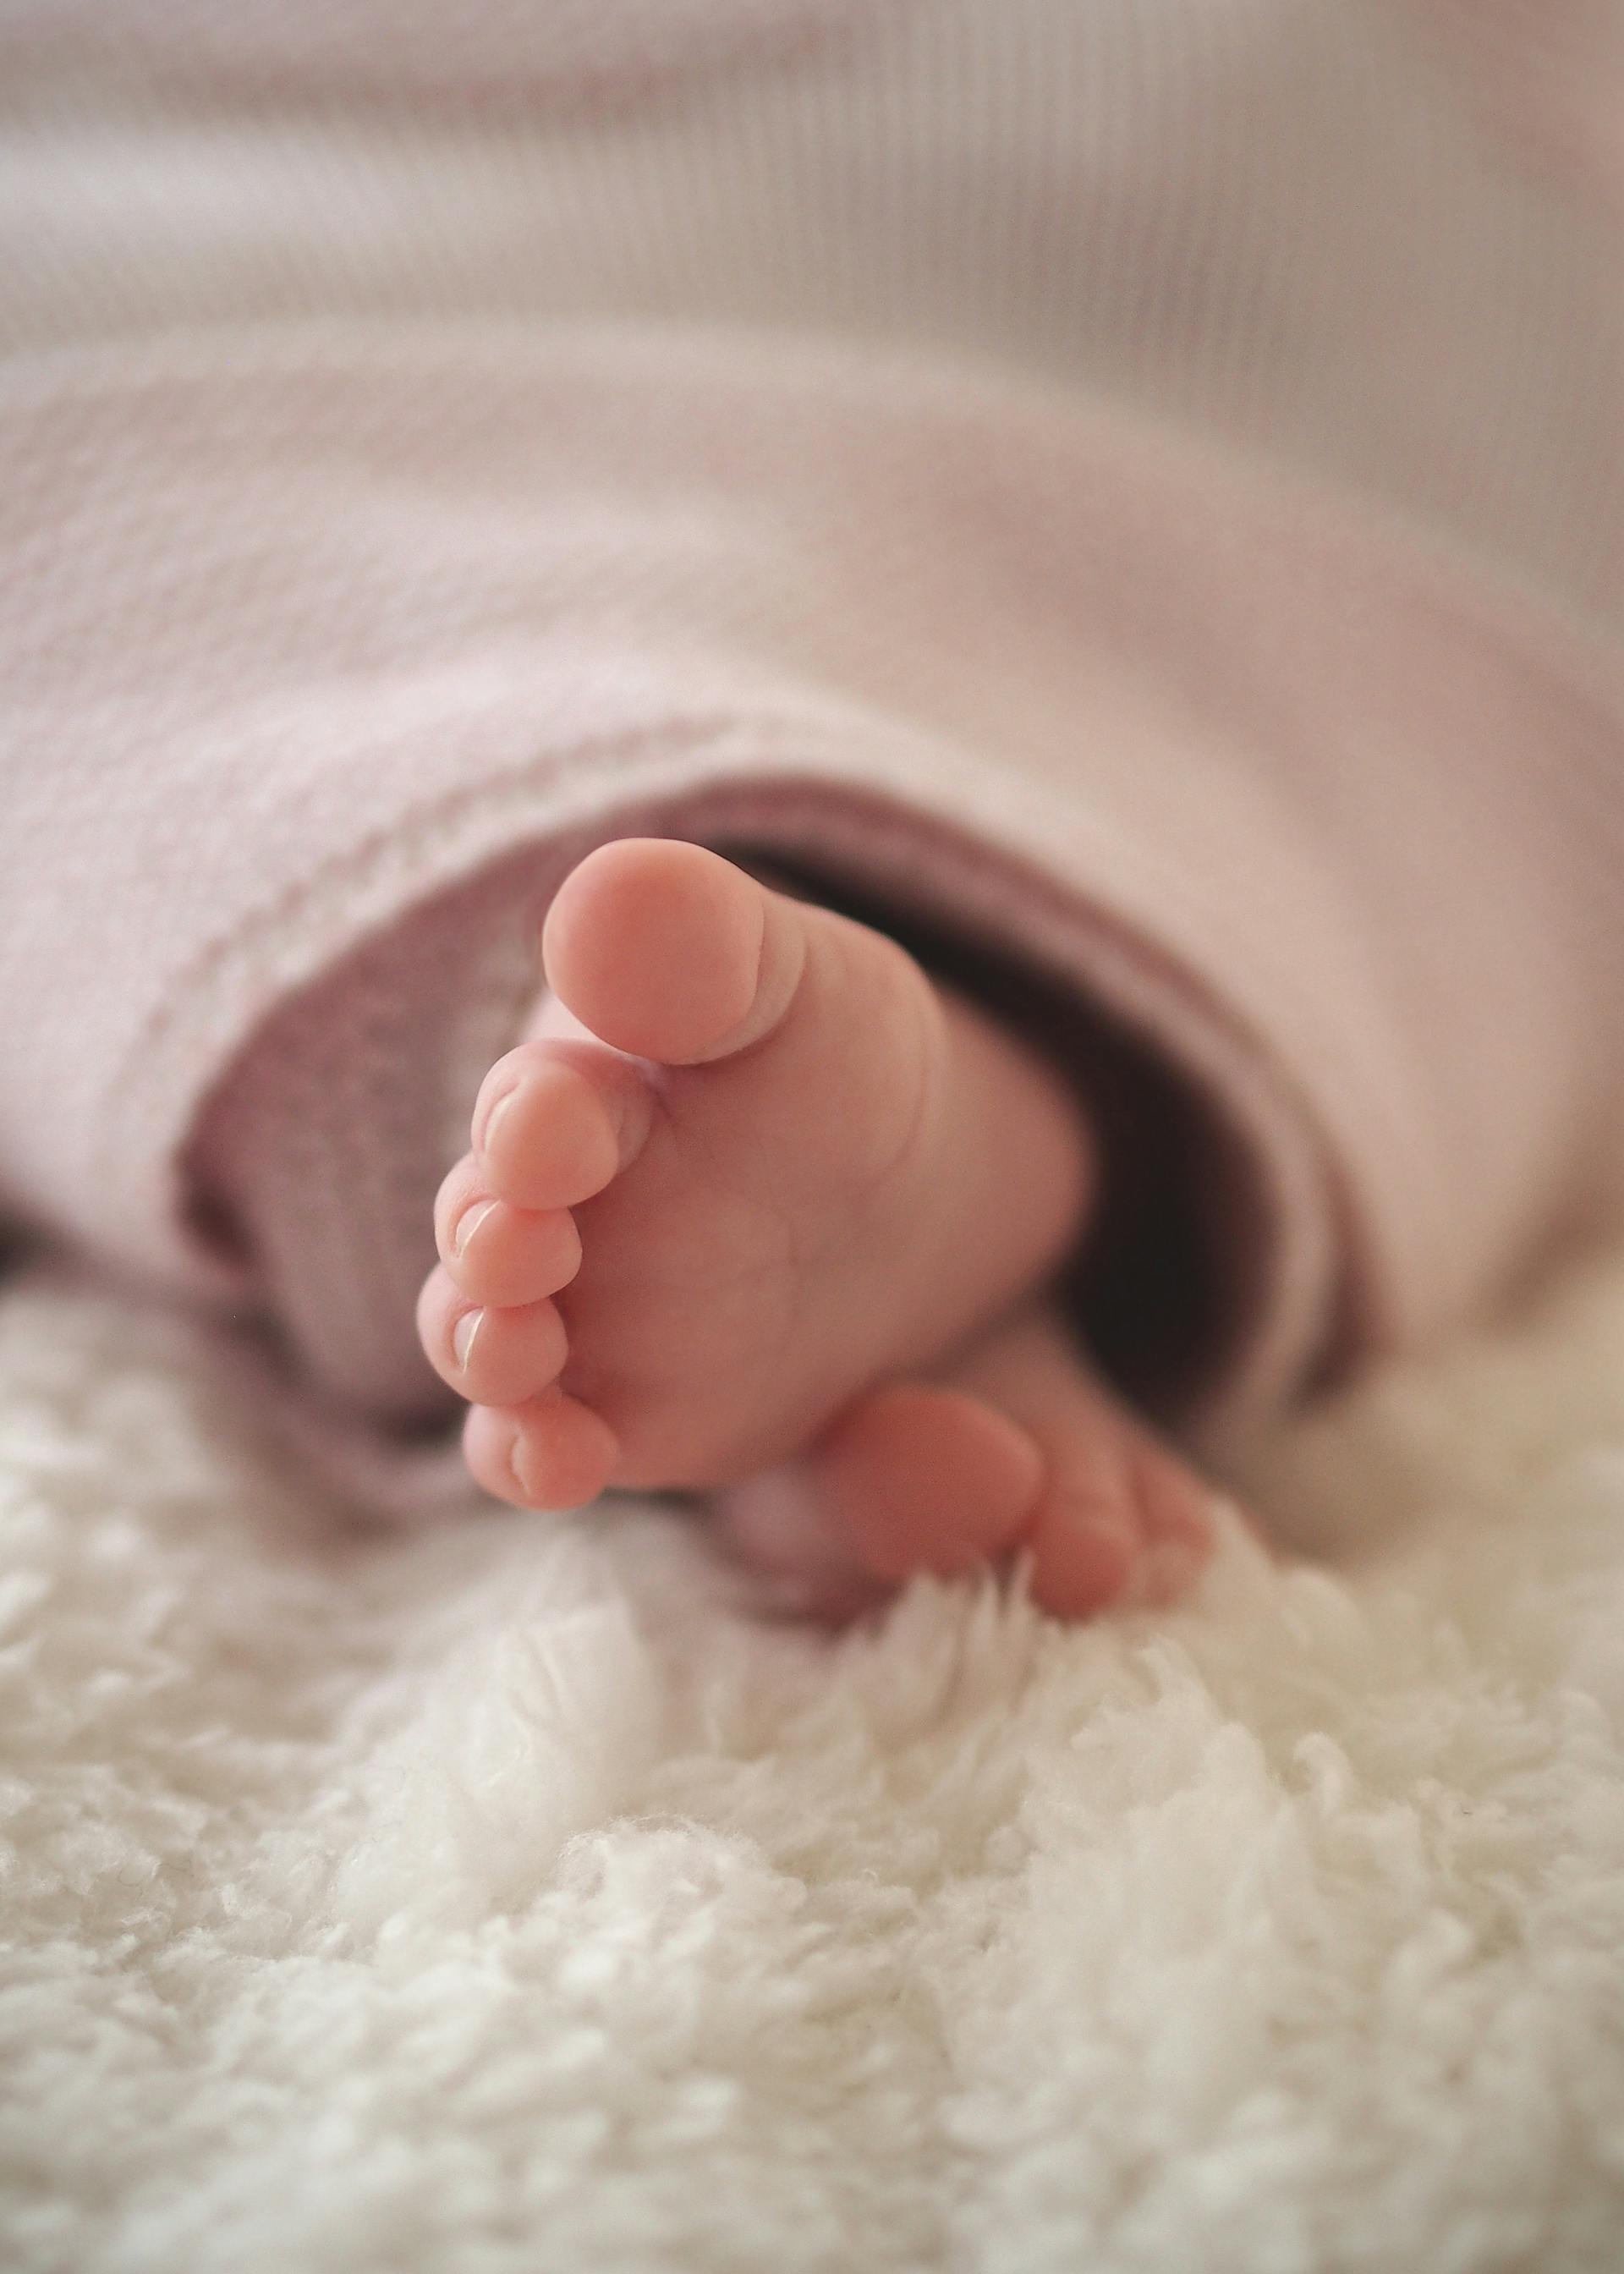 A newborn baby's feet | Source: Pexels